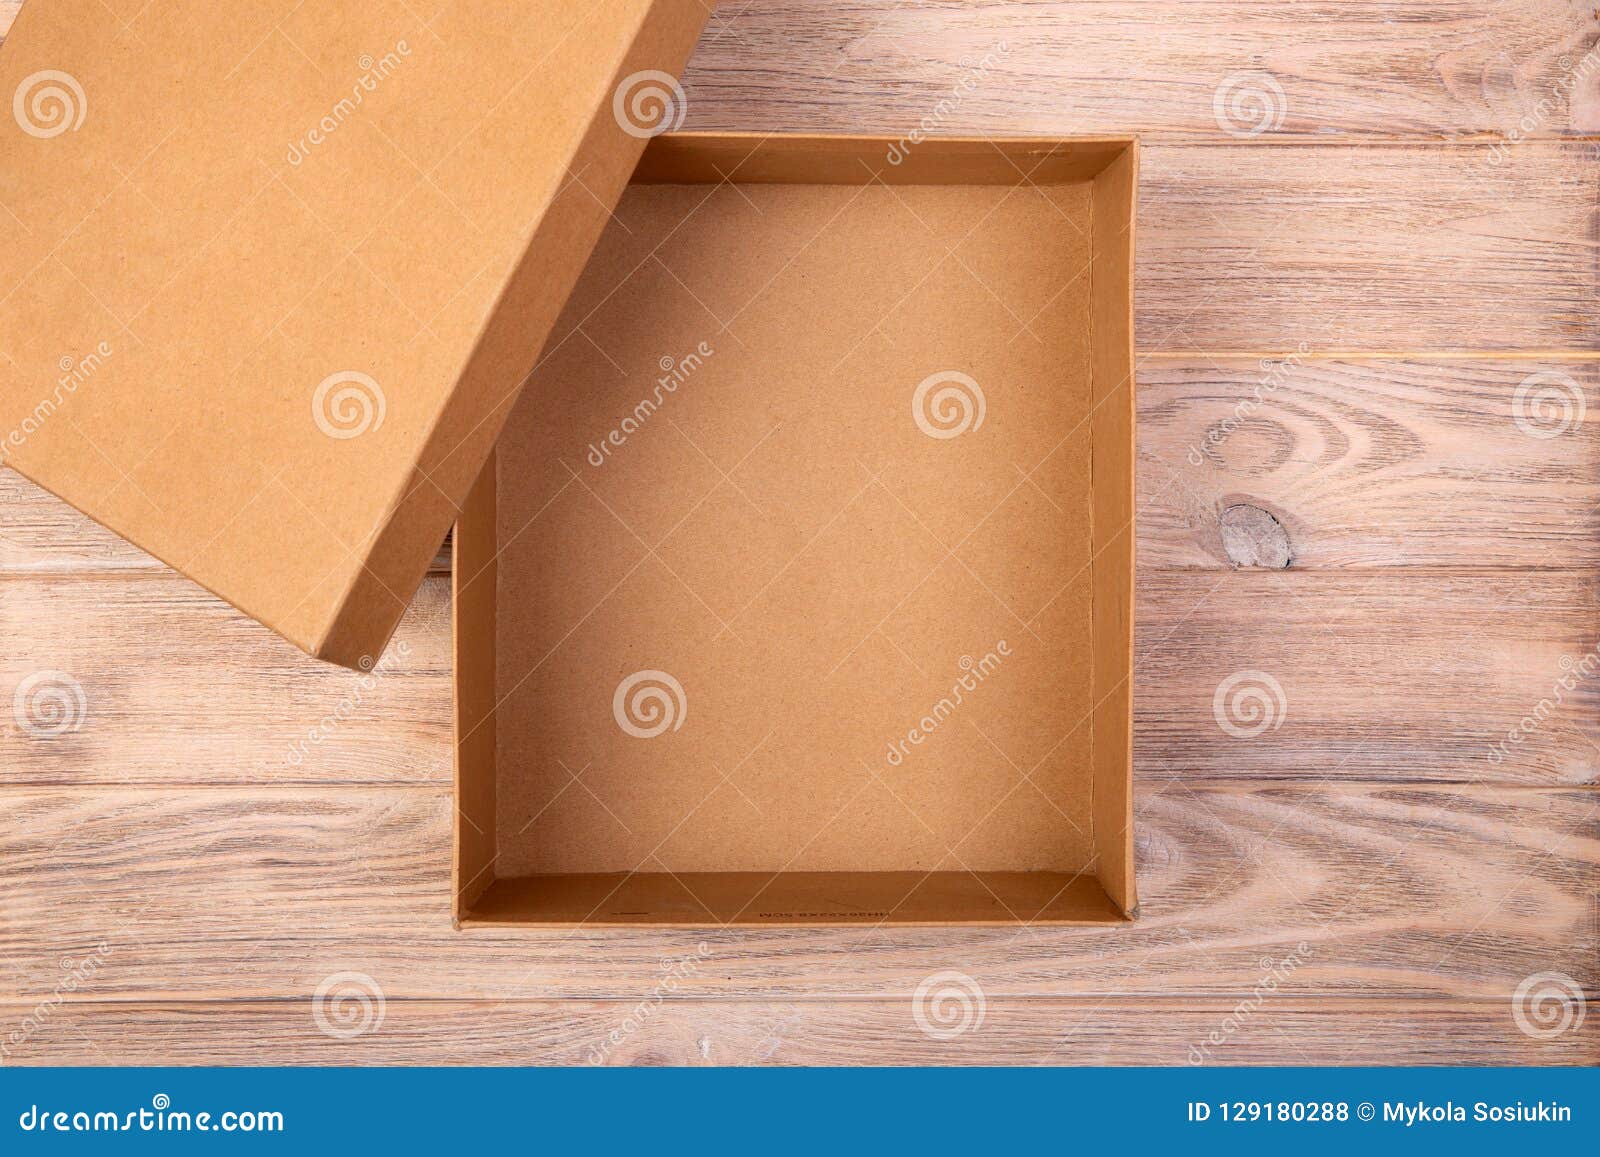 Подарочная коробка вид сверху